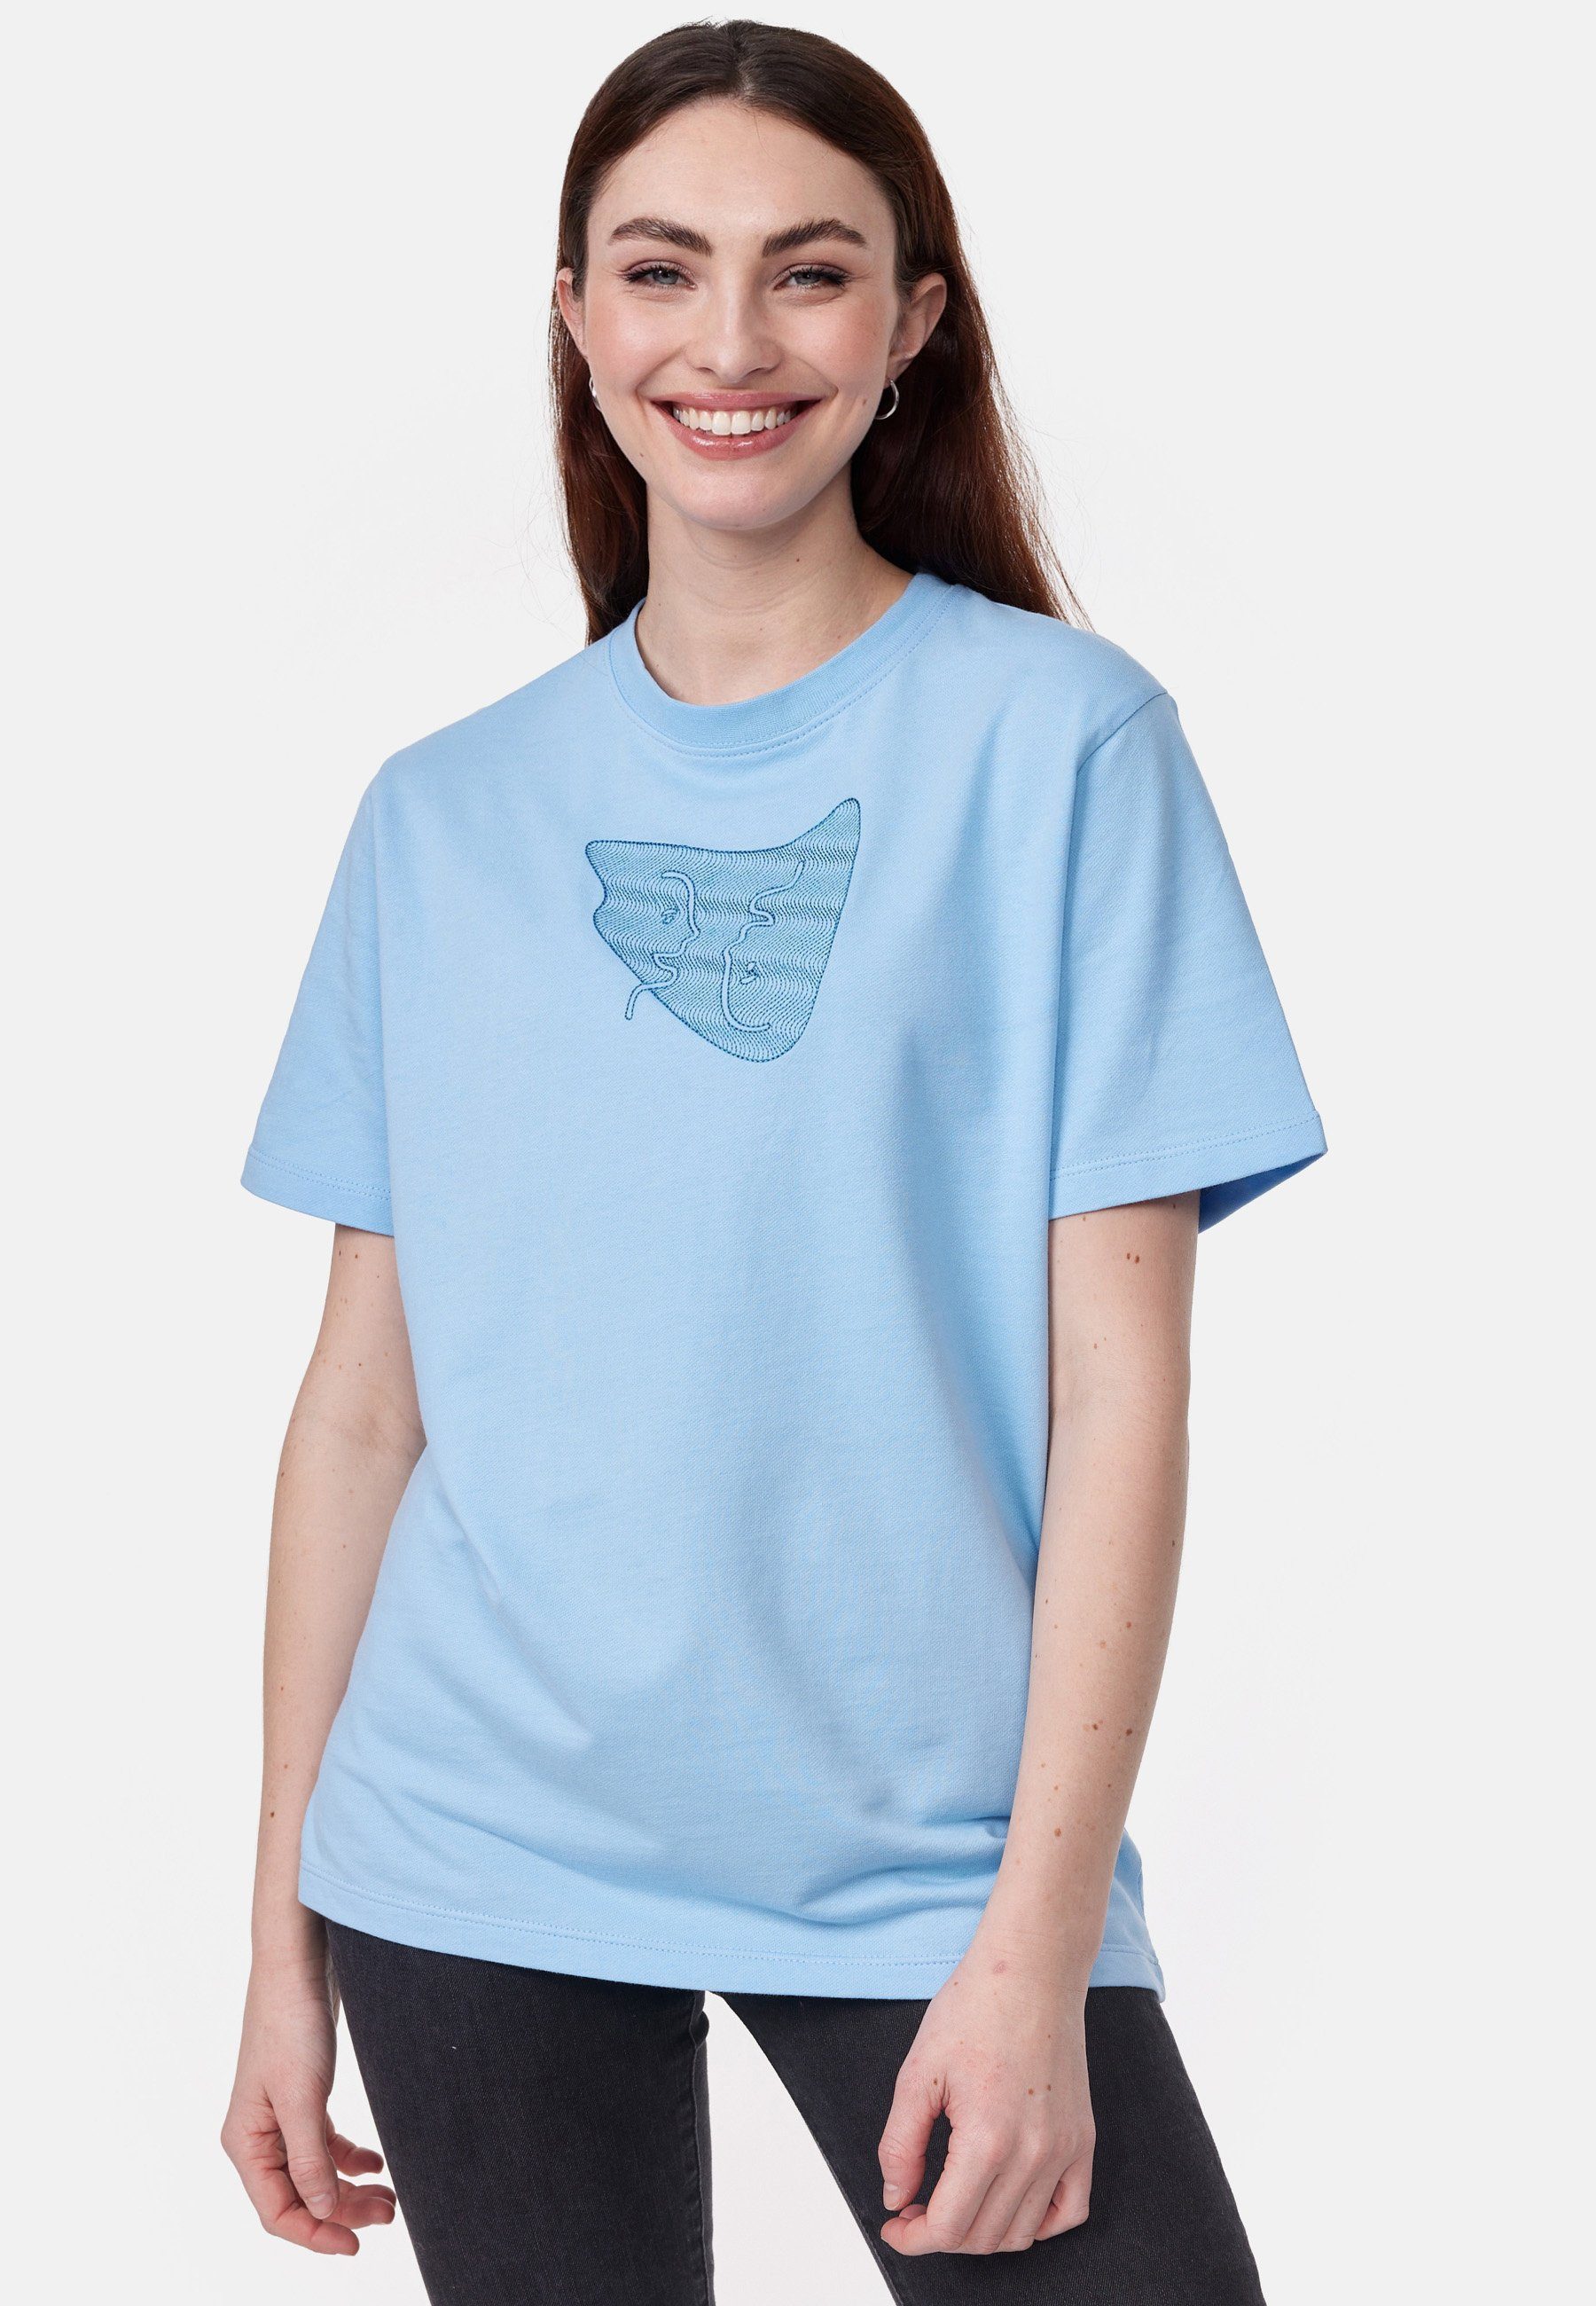 BLAU Design mit modernem smiler. laugh. T-Shirt